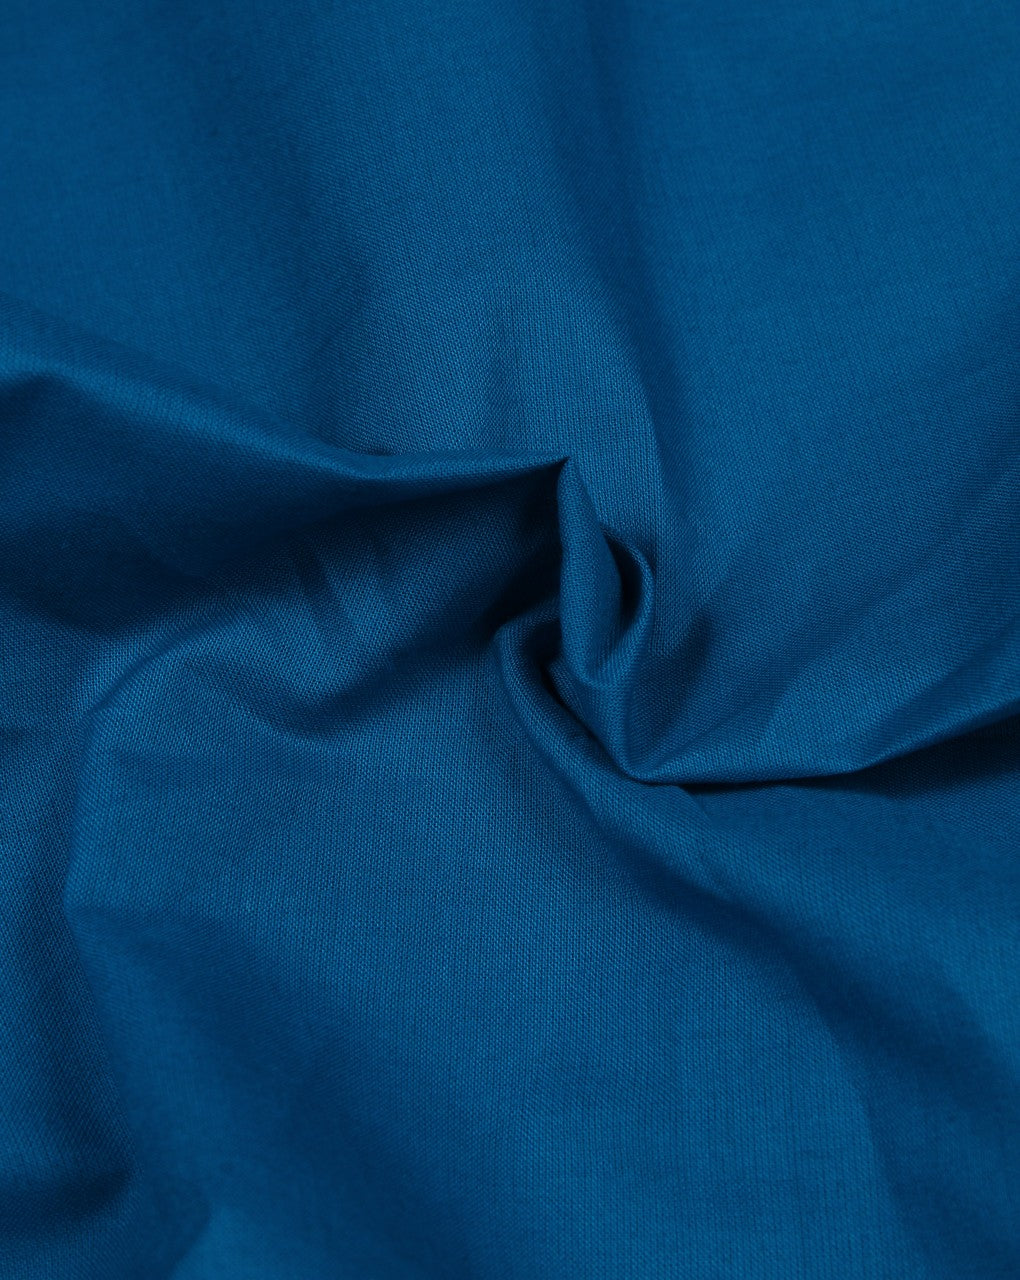 Plain Light Blue Cotton Cambric Fabric